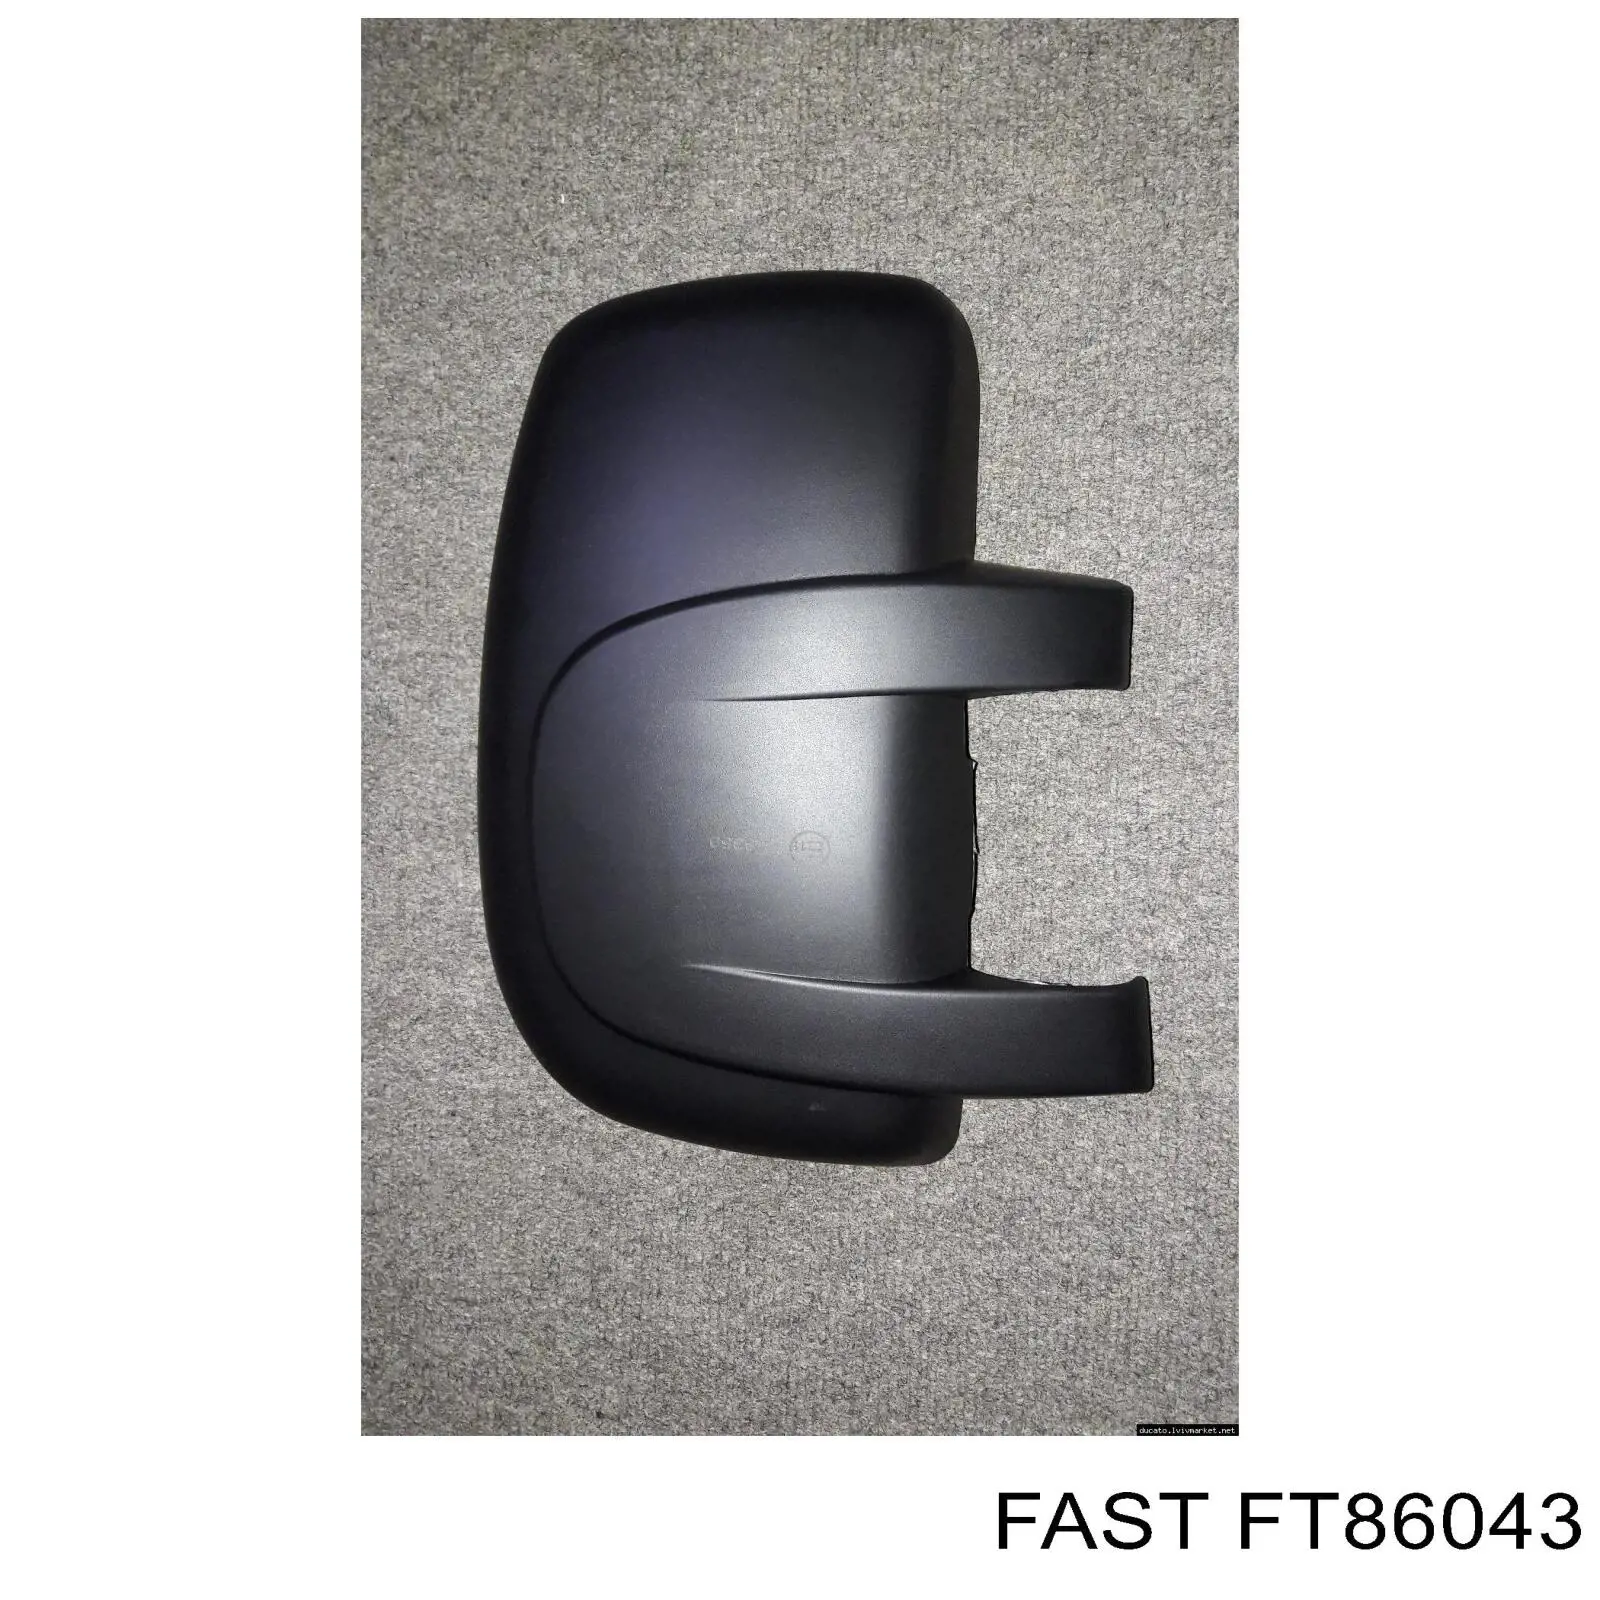 FT86043 Fast cubierta de espejo retrovisor derecho